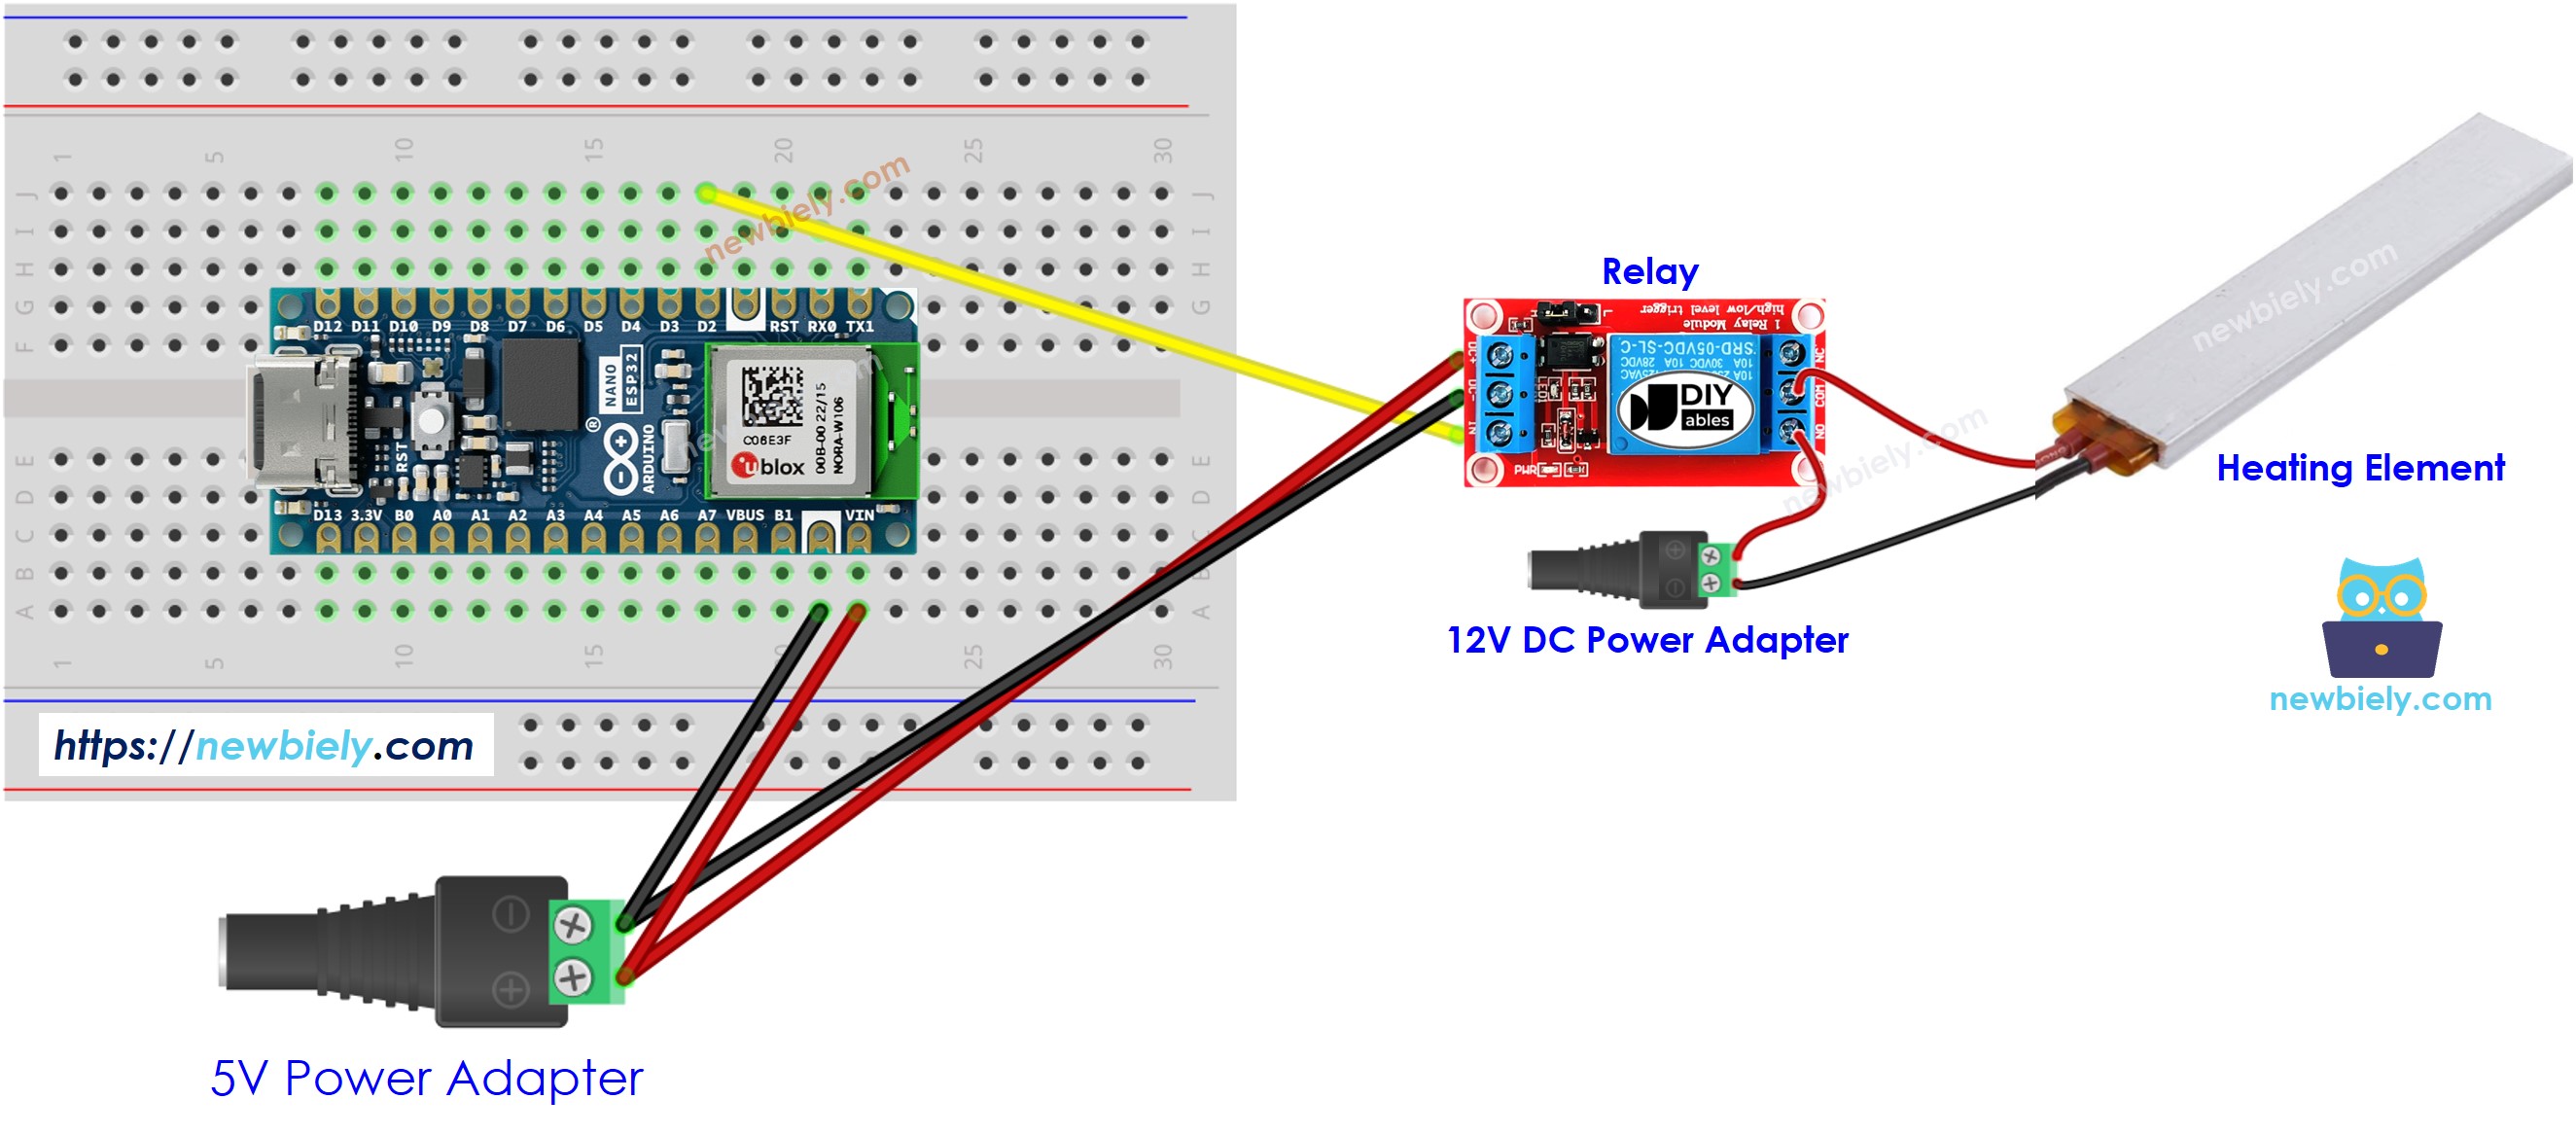 The wiring diagram between Arduino Nano ESP32 and Heating Element